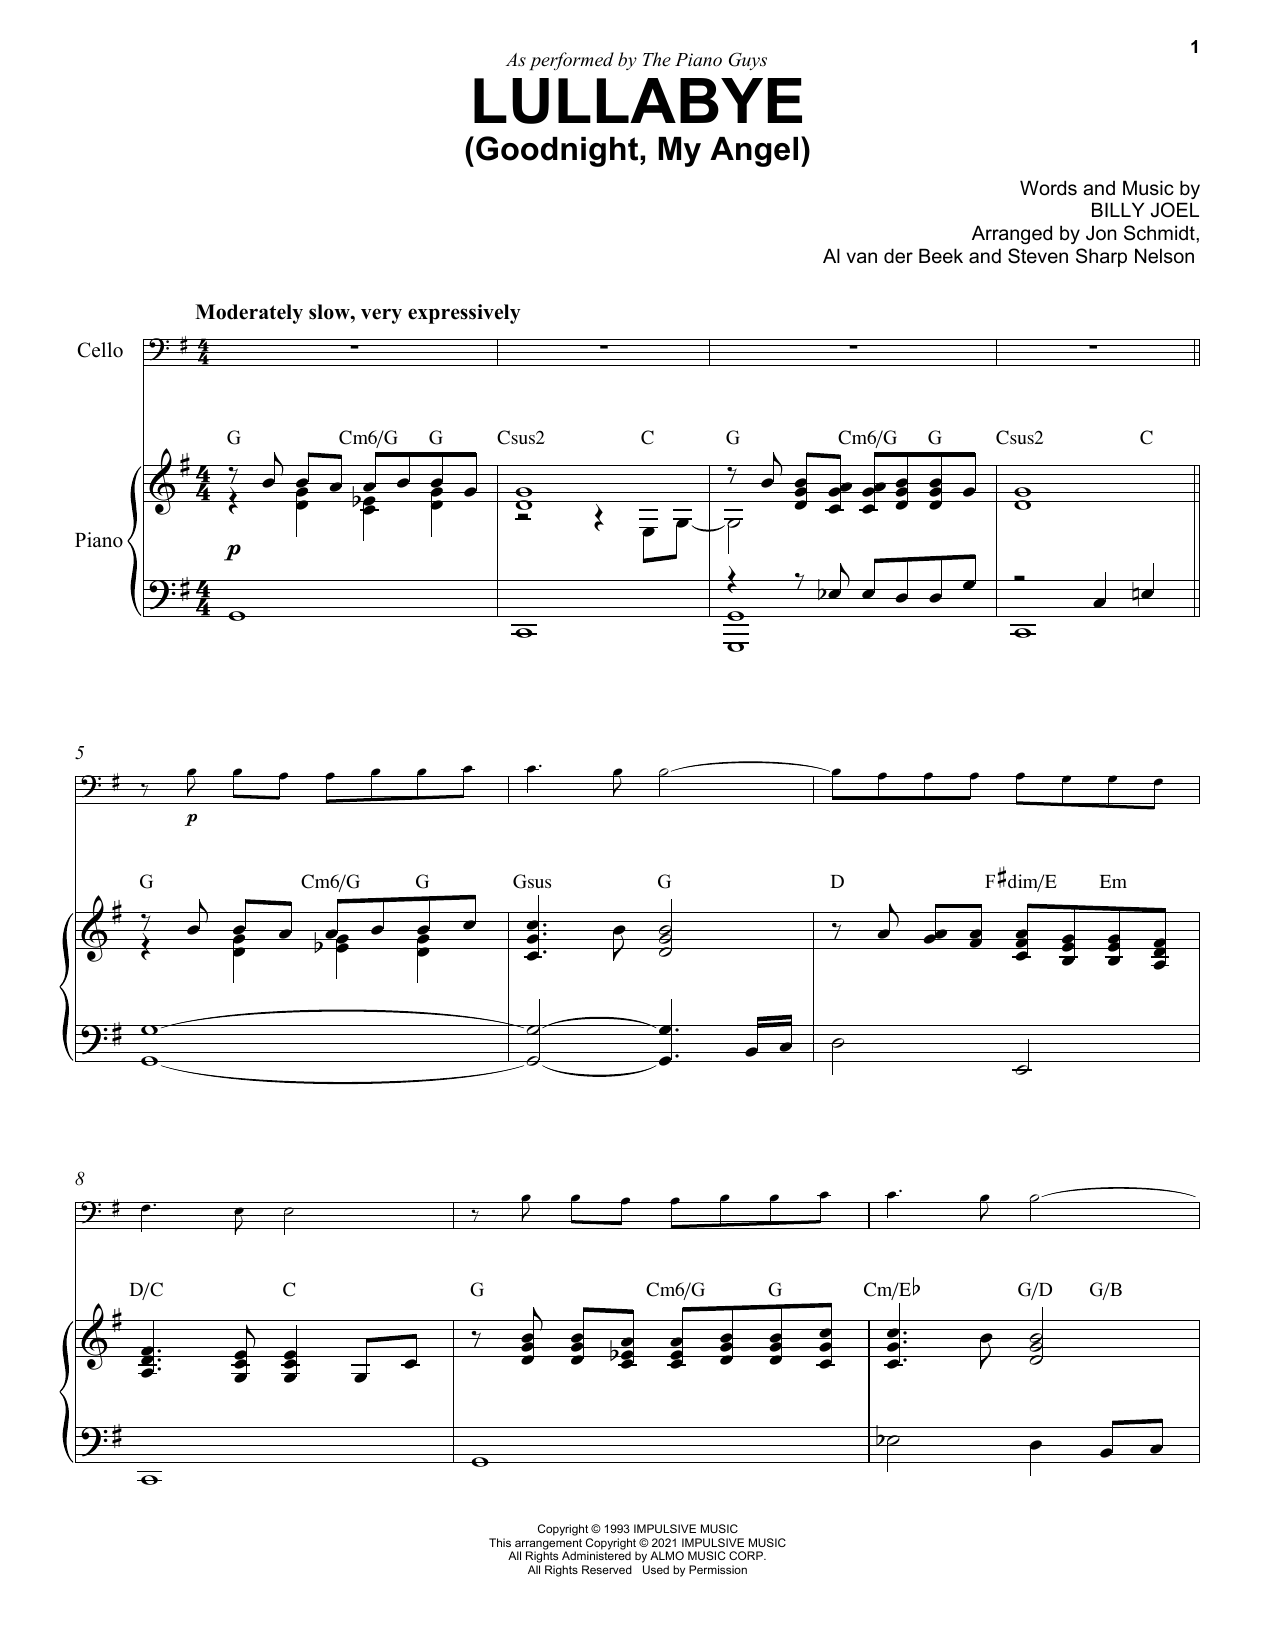 Download The Piano Guys Lullabye (Goodnight, My Angel) Sheet Music